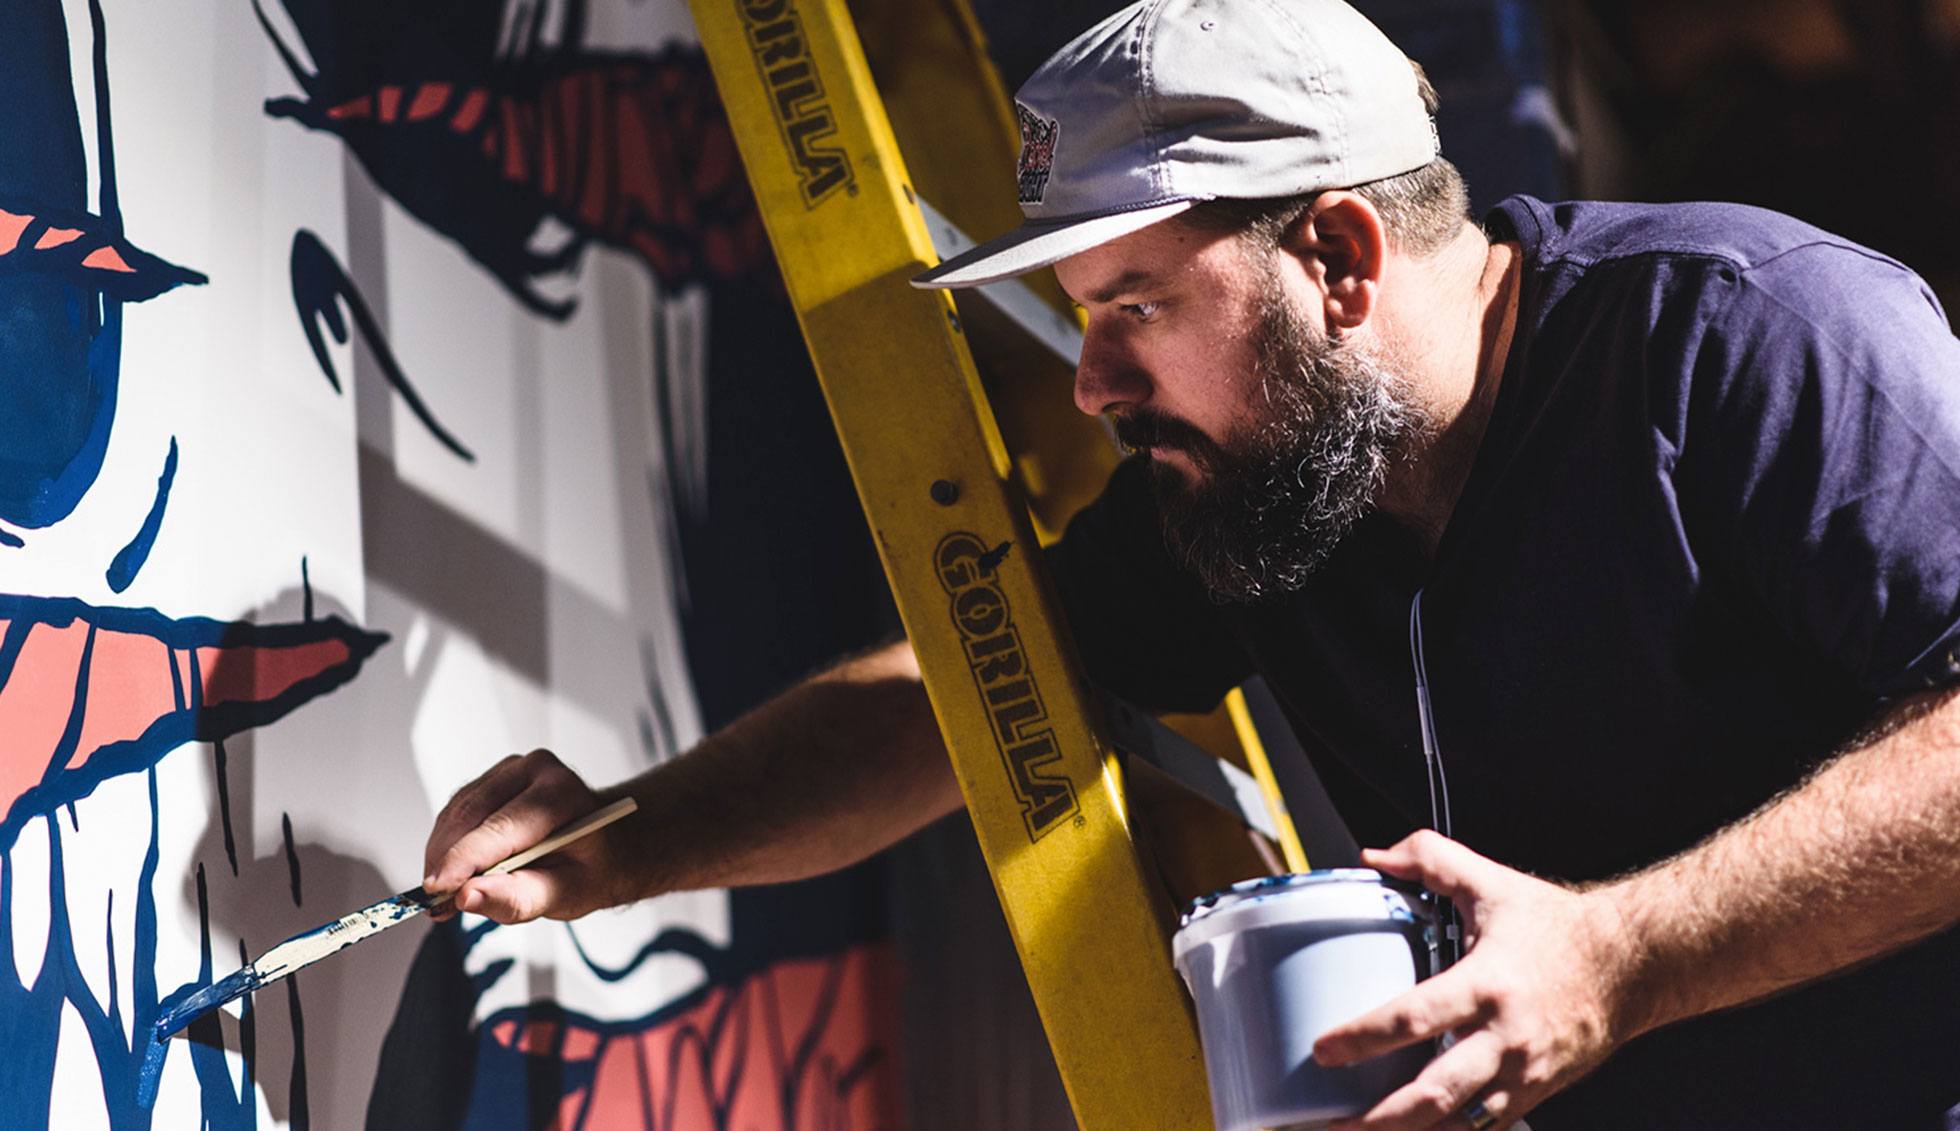 Kiel paints an indoor mural on a ladder, backlit by bright lights